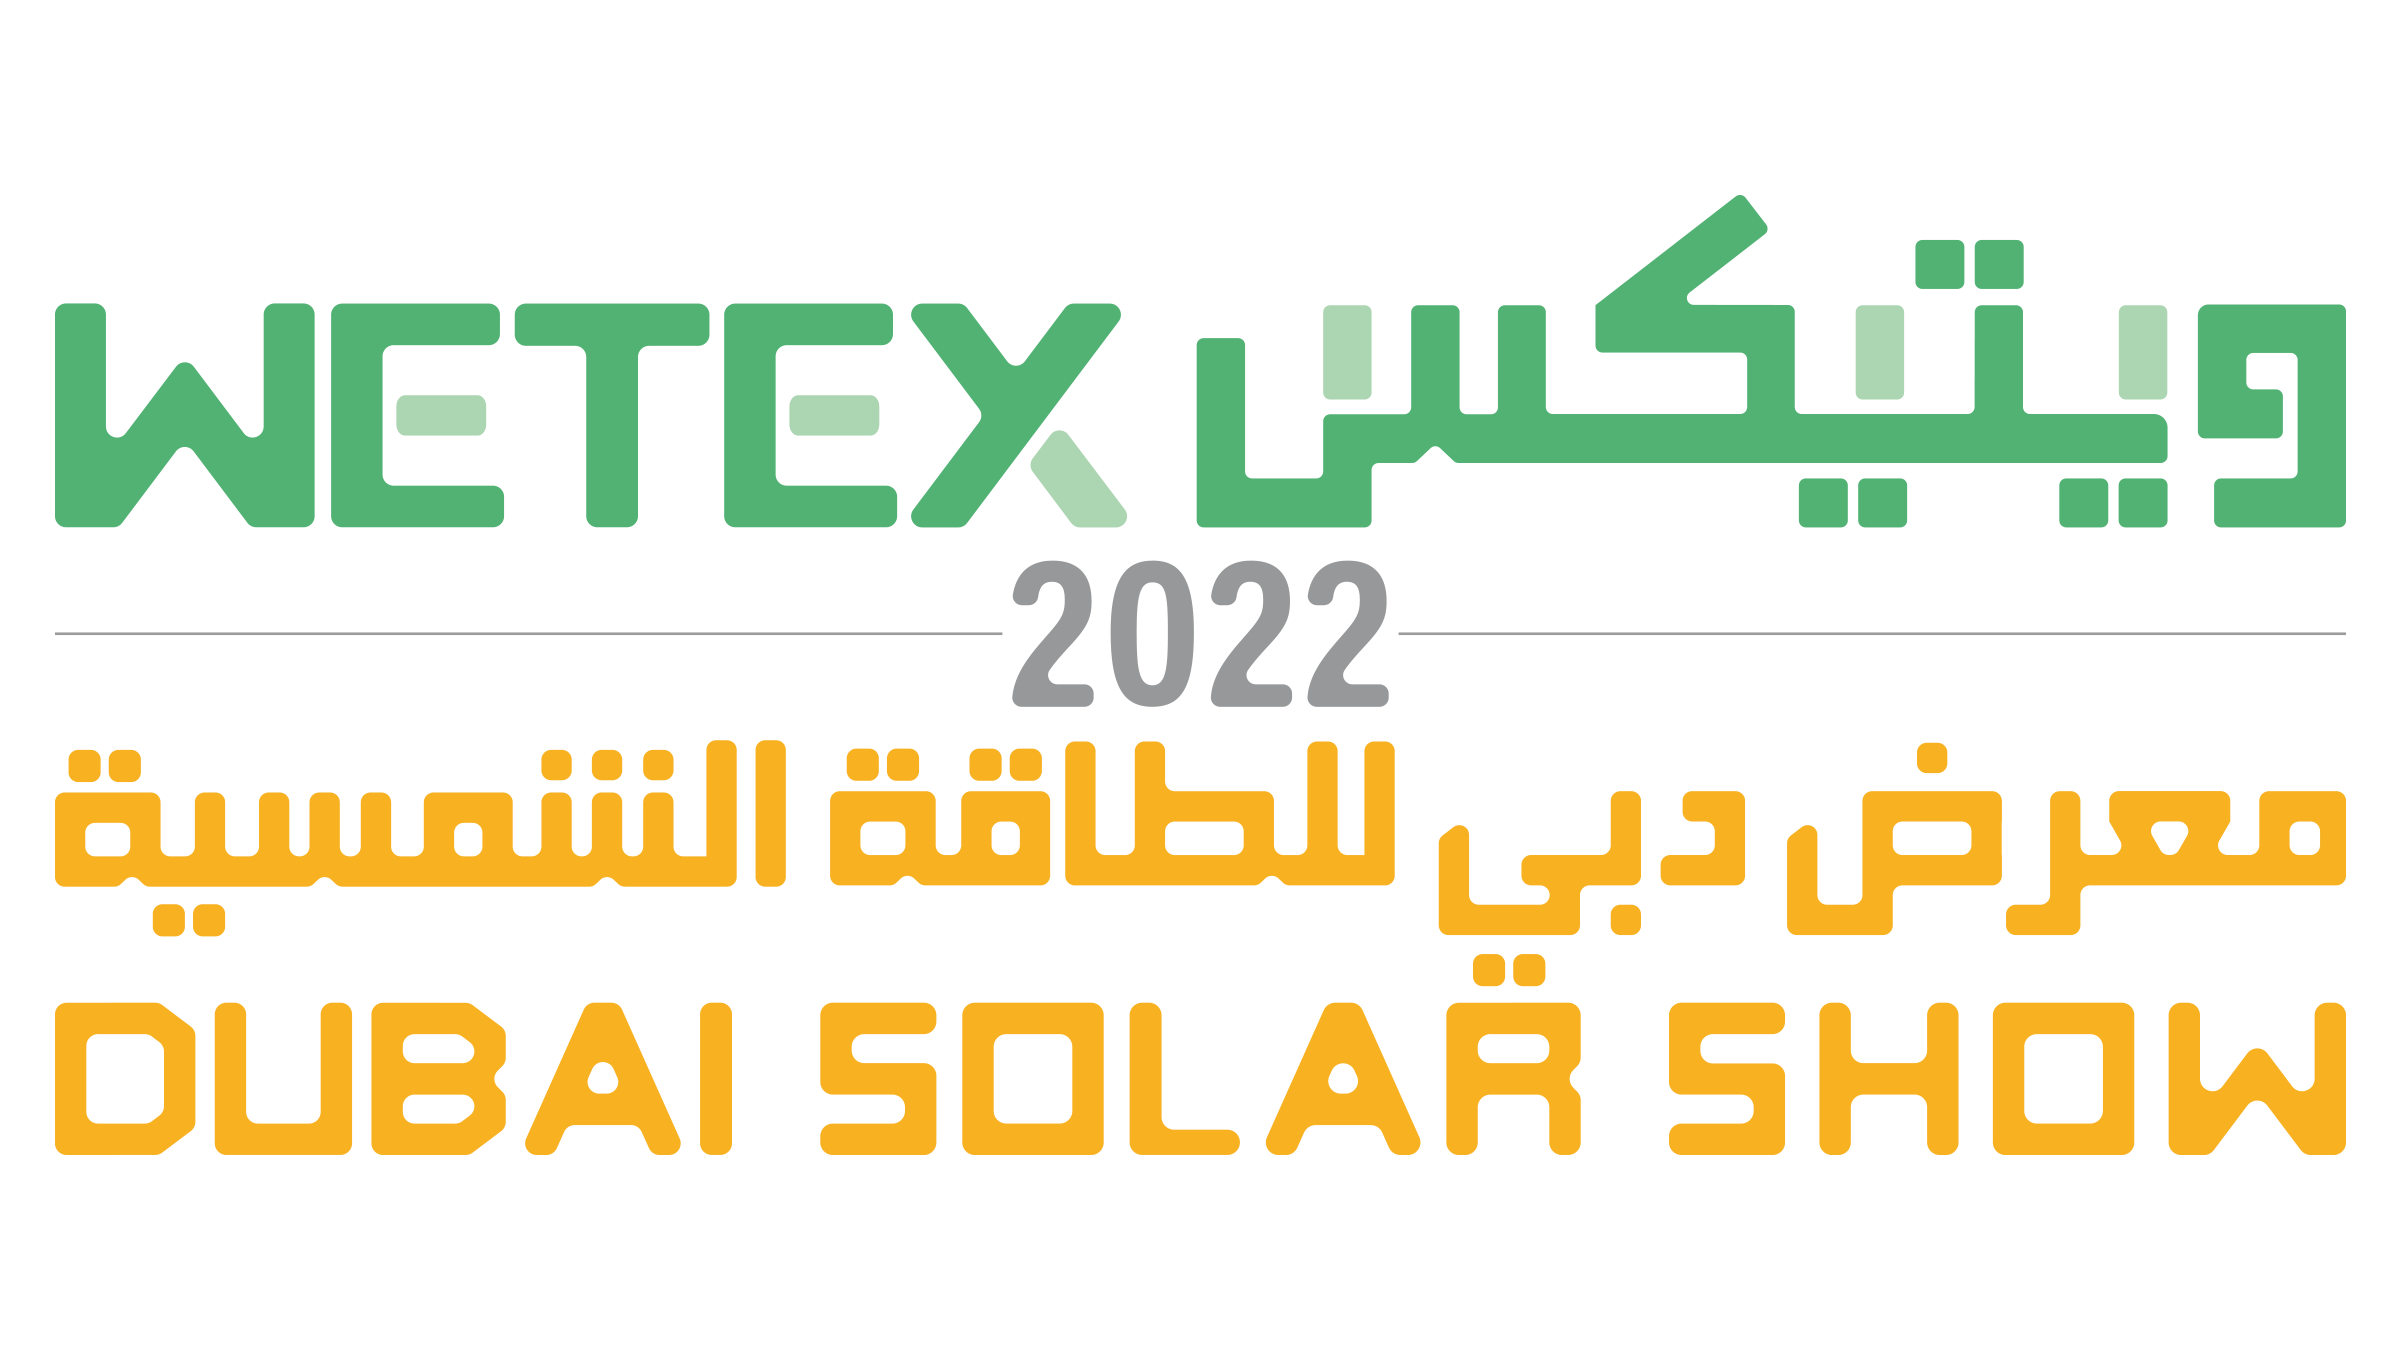 Wetex 2022 Dubai Solar Show Logo